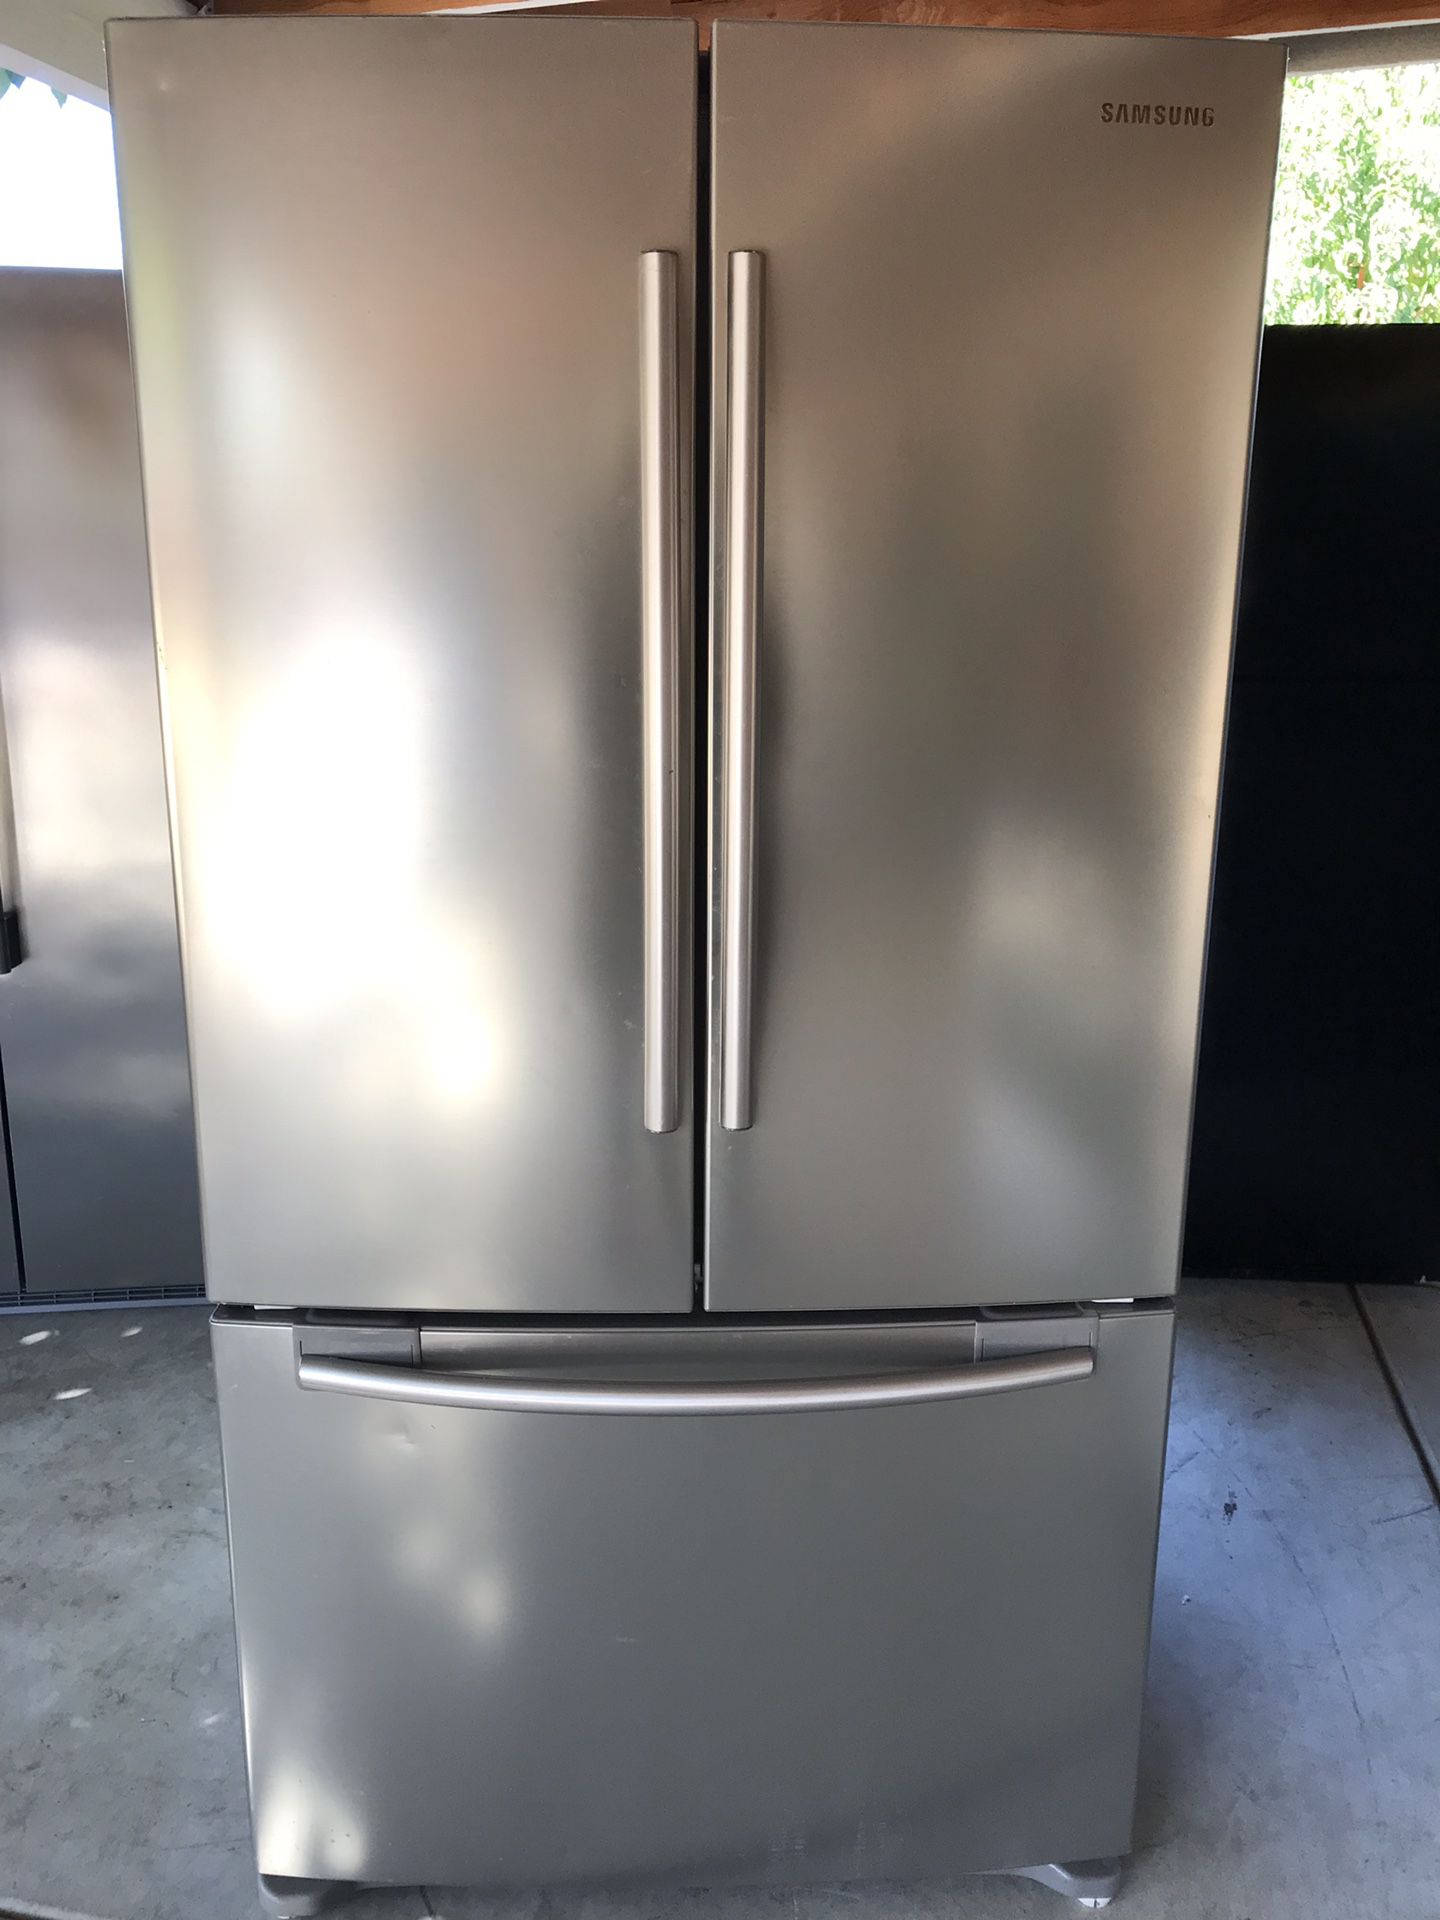 Samsung stainless steel refrigerator